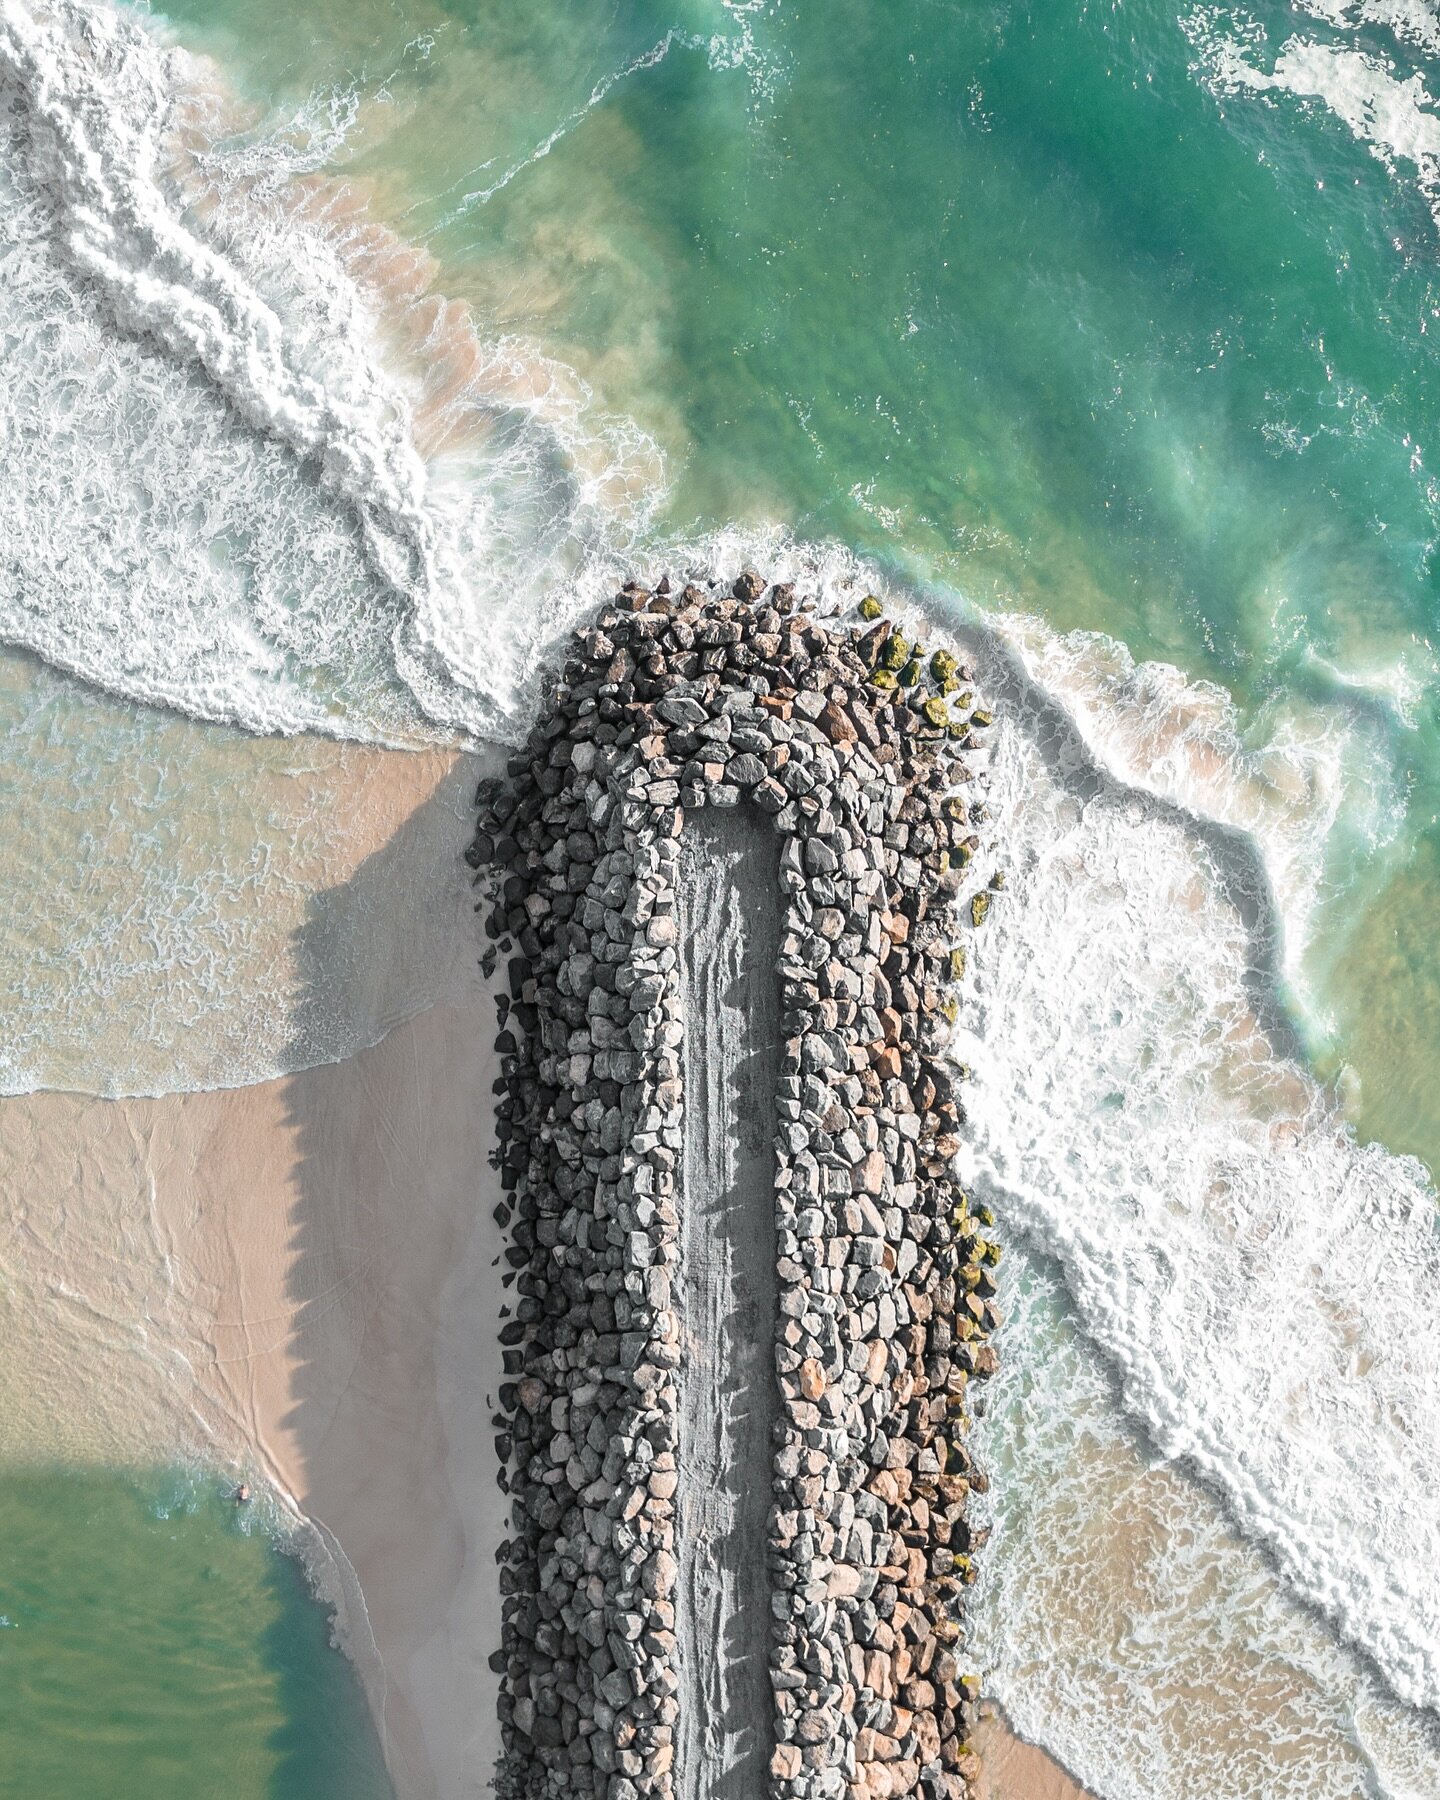 Seawall, Tallebudgera Creek. 

Framed orders now available for shipping within Australia. 

#TallebudgeraCreek #SeaWallCapture #DroneArt #FineArtPrints #AerialPhotography #NatureCanvas #CoastalVibes #OceanSerenity #WallDecor #DronePerspective #Prints